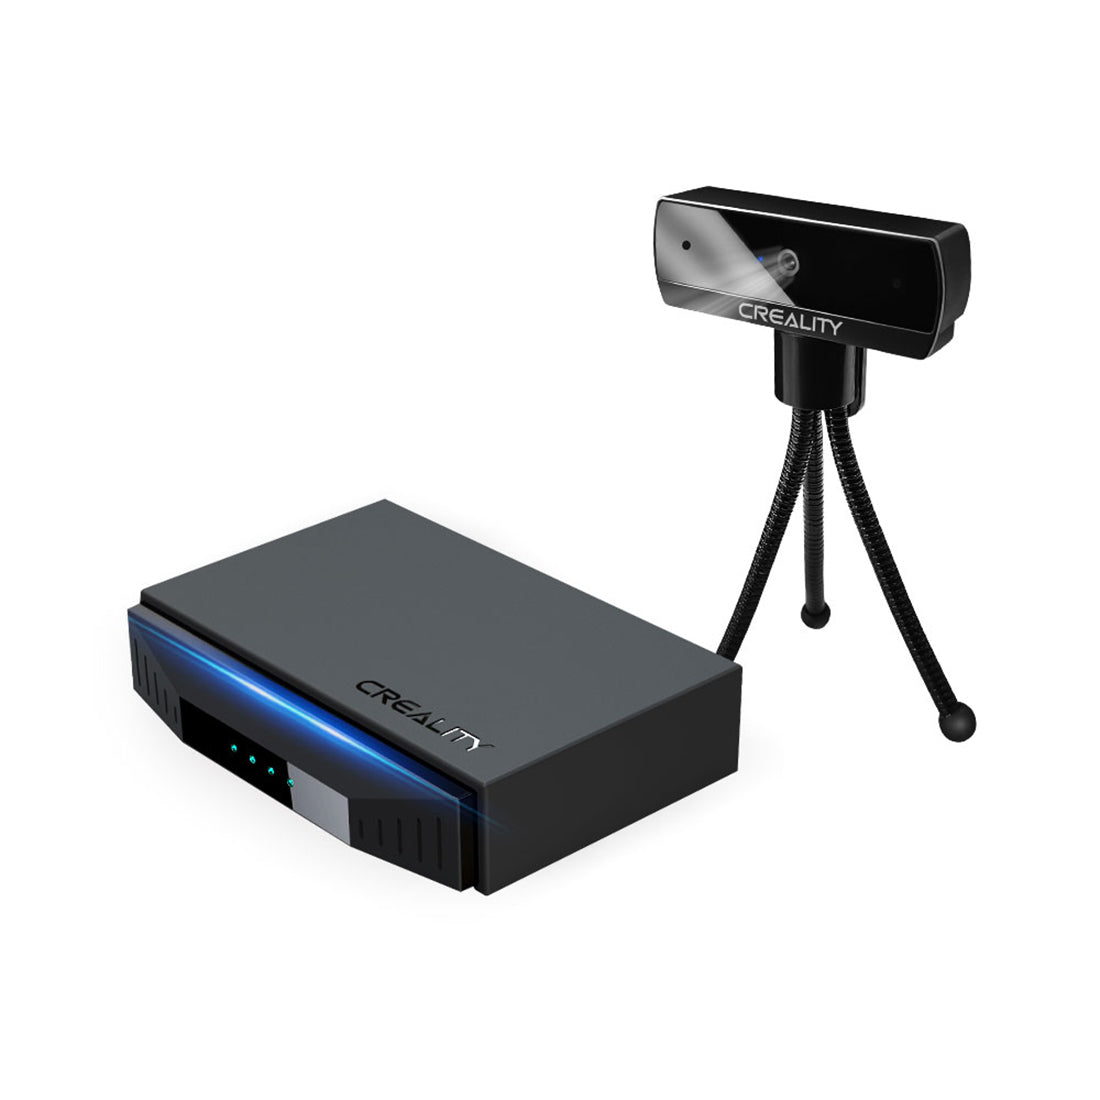 Creality Smart Kit Camera WiFi Box (Upgrade Version)